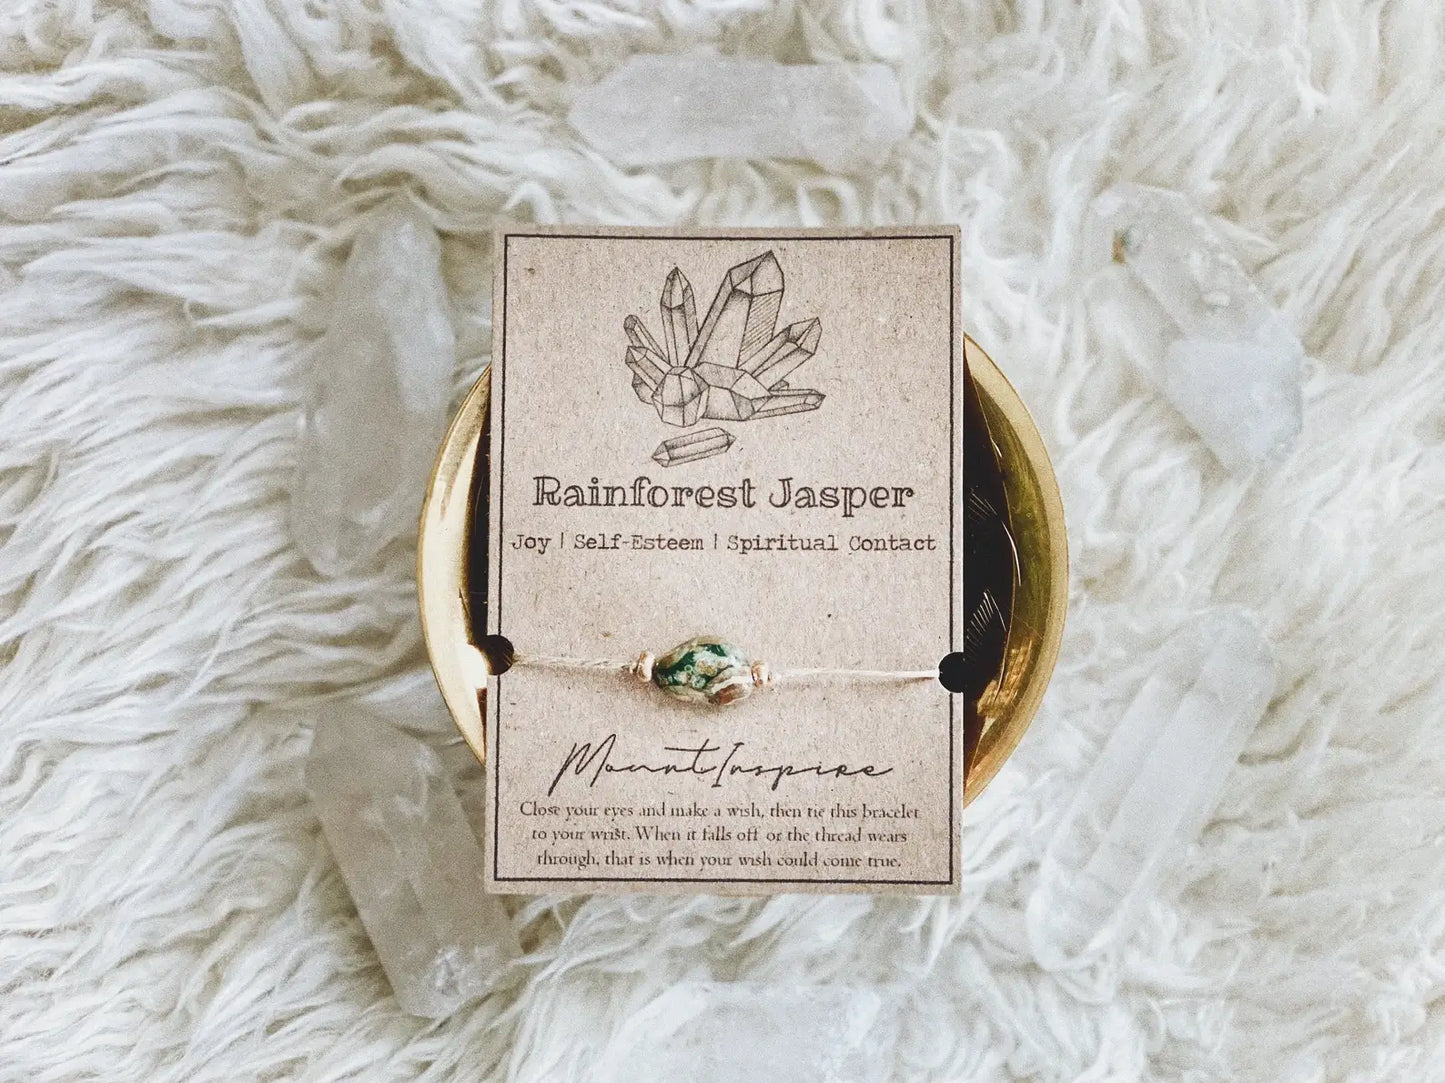 MountInspire Ltd. - Rainforest Jasper Crystal Wish Bracelet